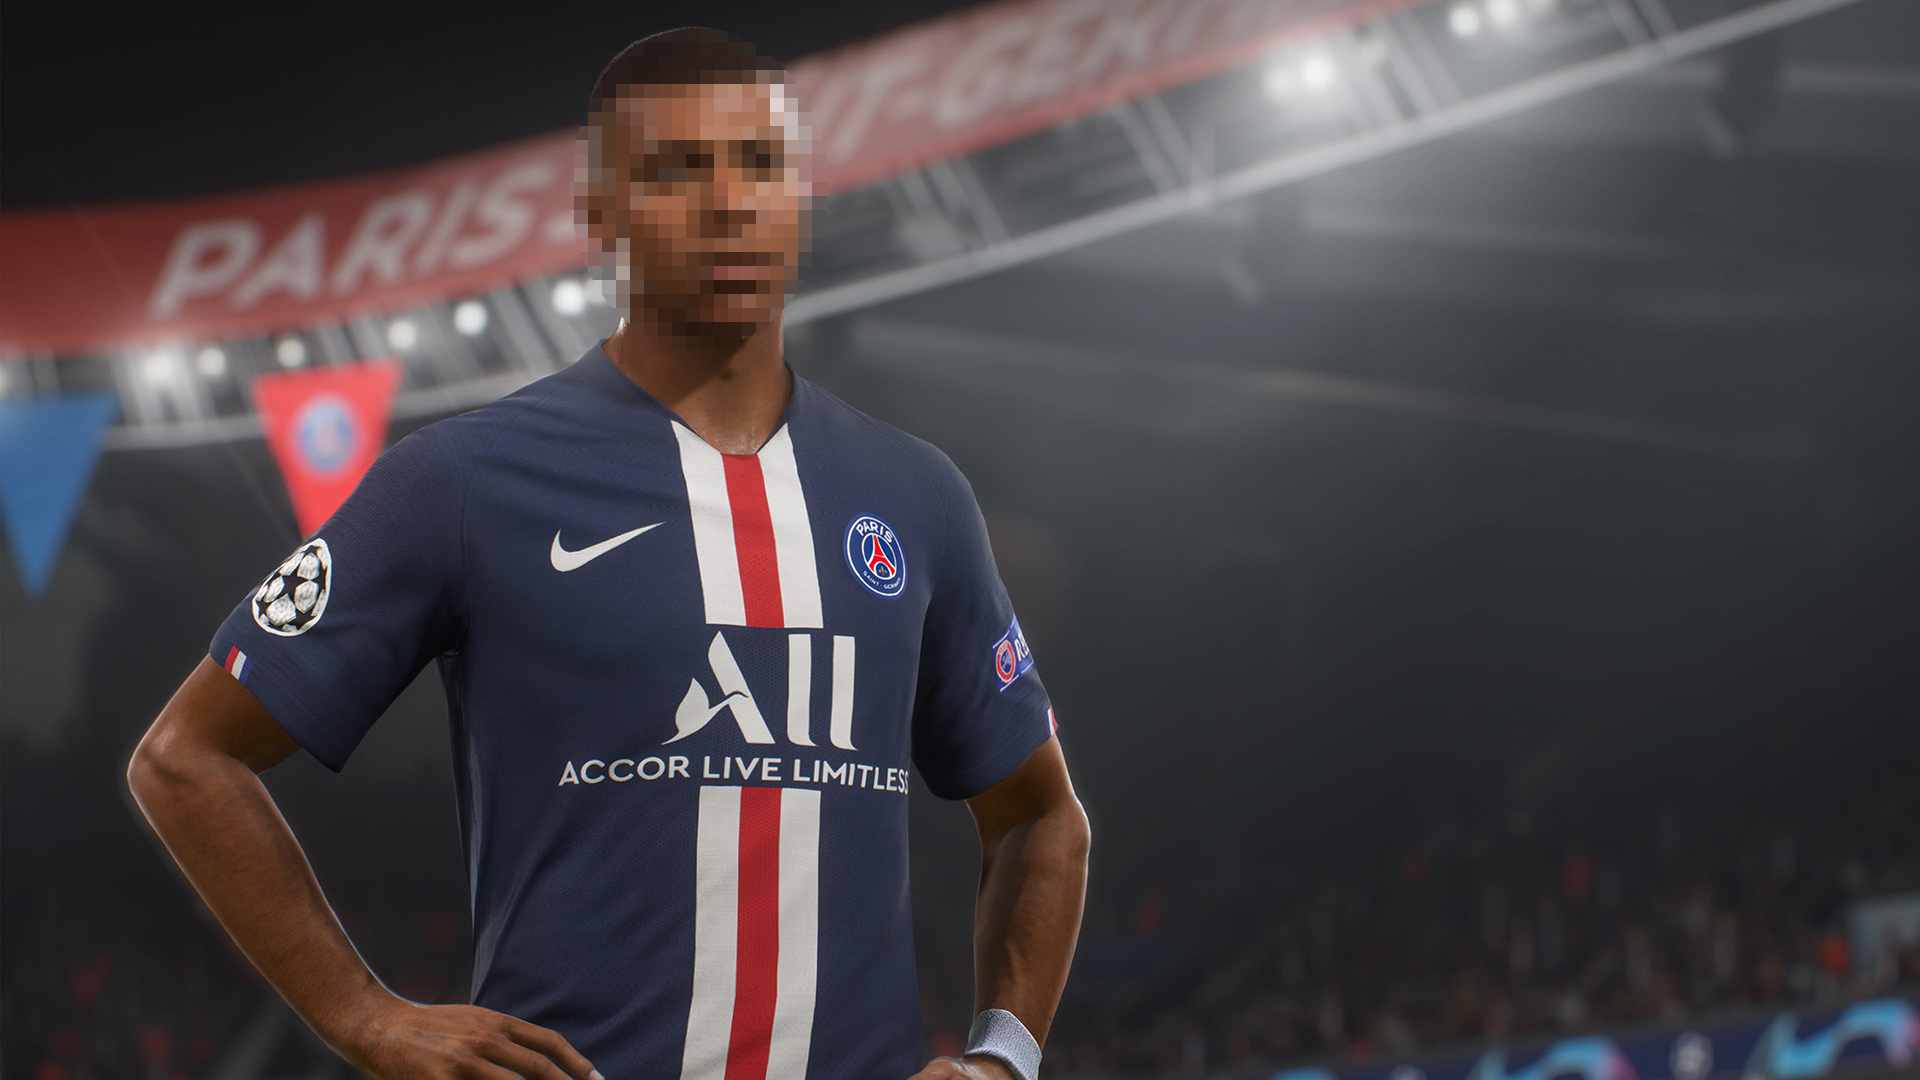 A disguised Paris Saint Germain player